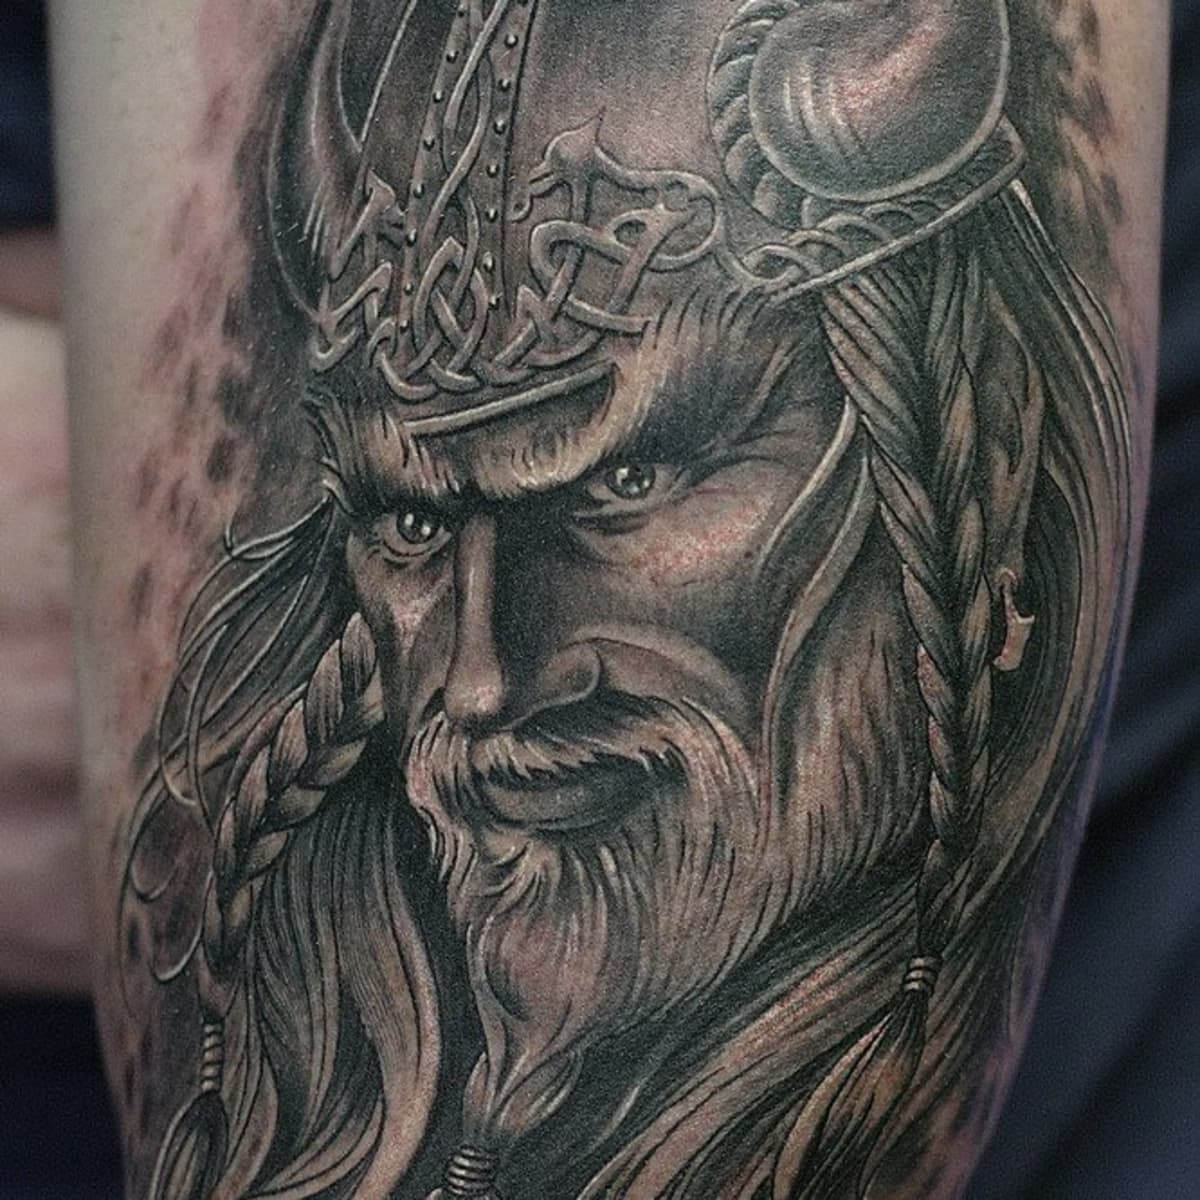 Powerful Warrior Tattoos - TatRing